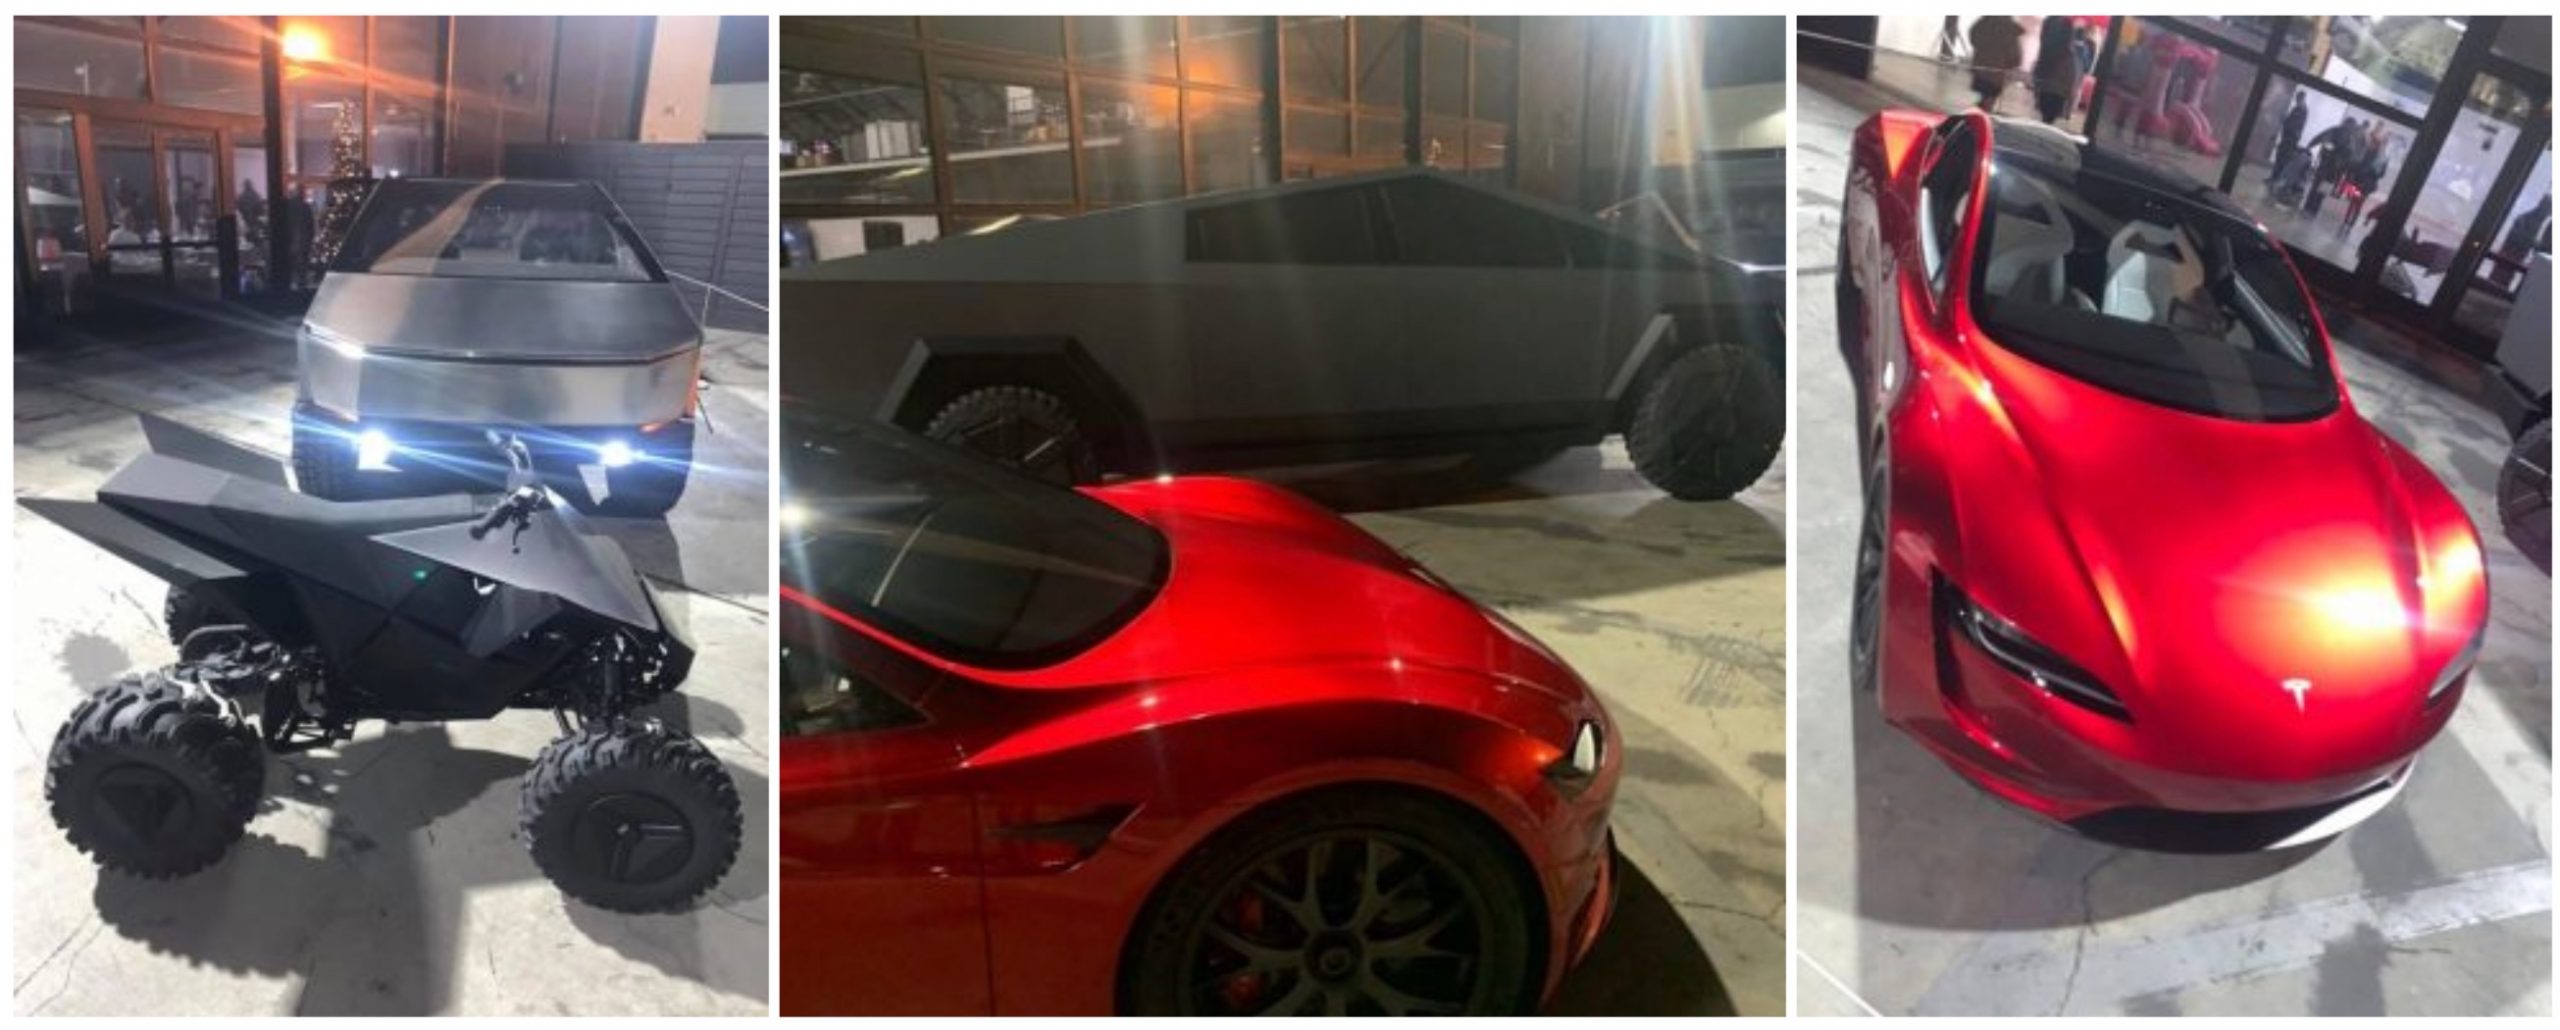 Next-gen Tesla Roadster and Cybertruck at Hawthorne Design Center, 2019 Tesla Holiday Party (Credit: giftedkick_/Instagram)